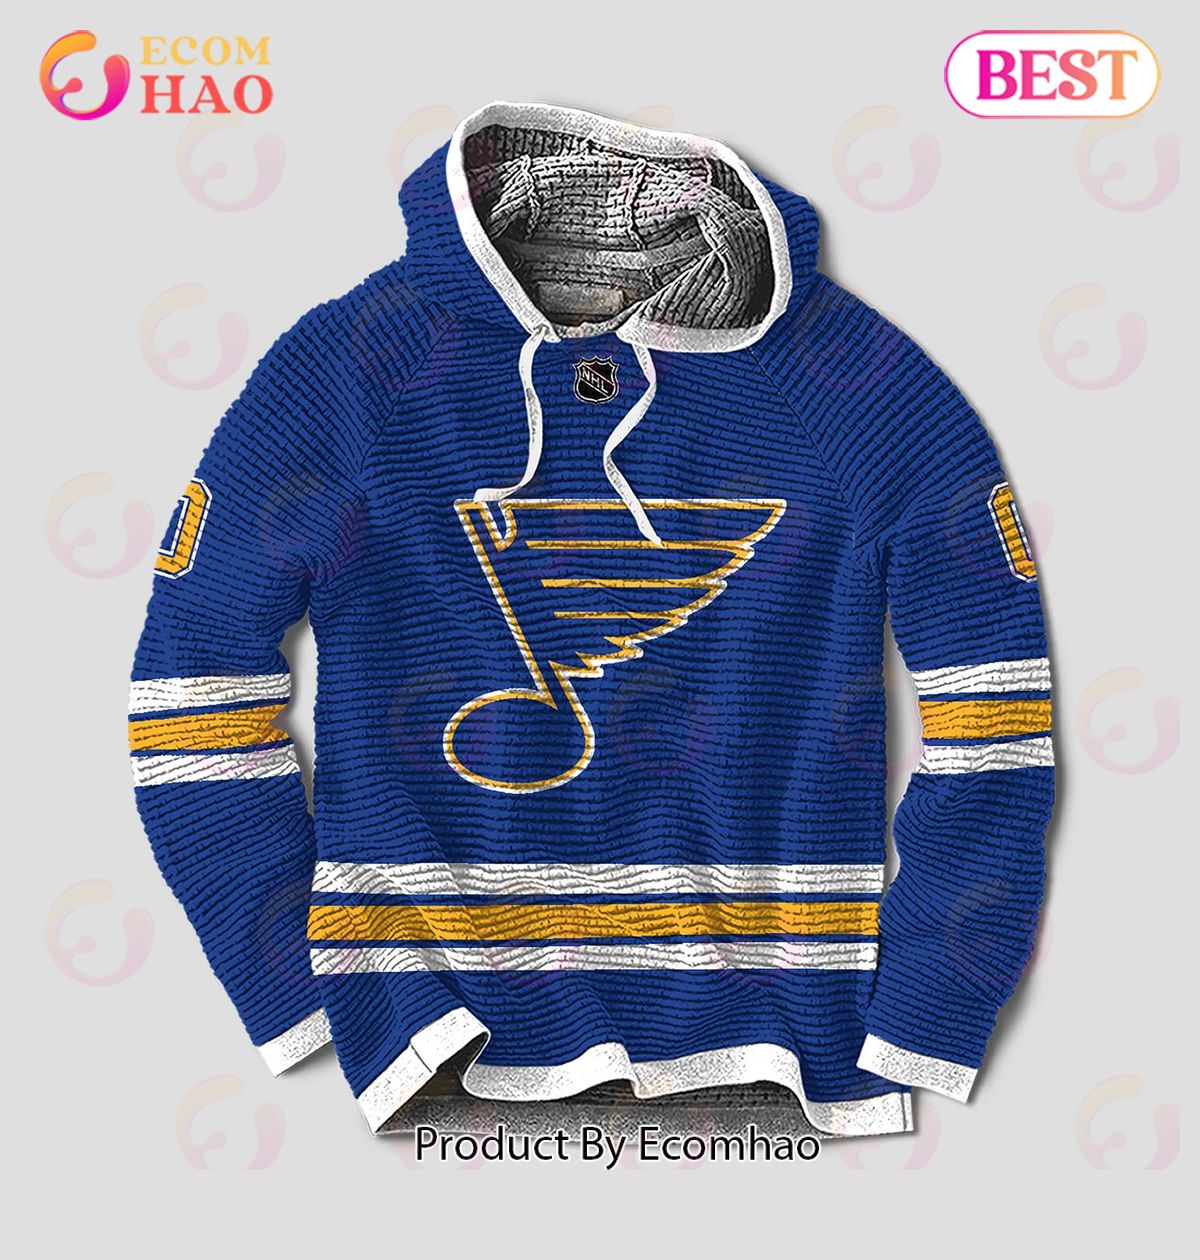 Best dad ever St. Louis Blues hockey team shirt, sweater, hoodie